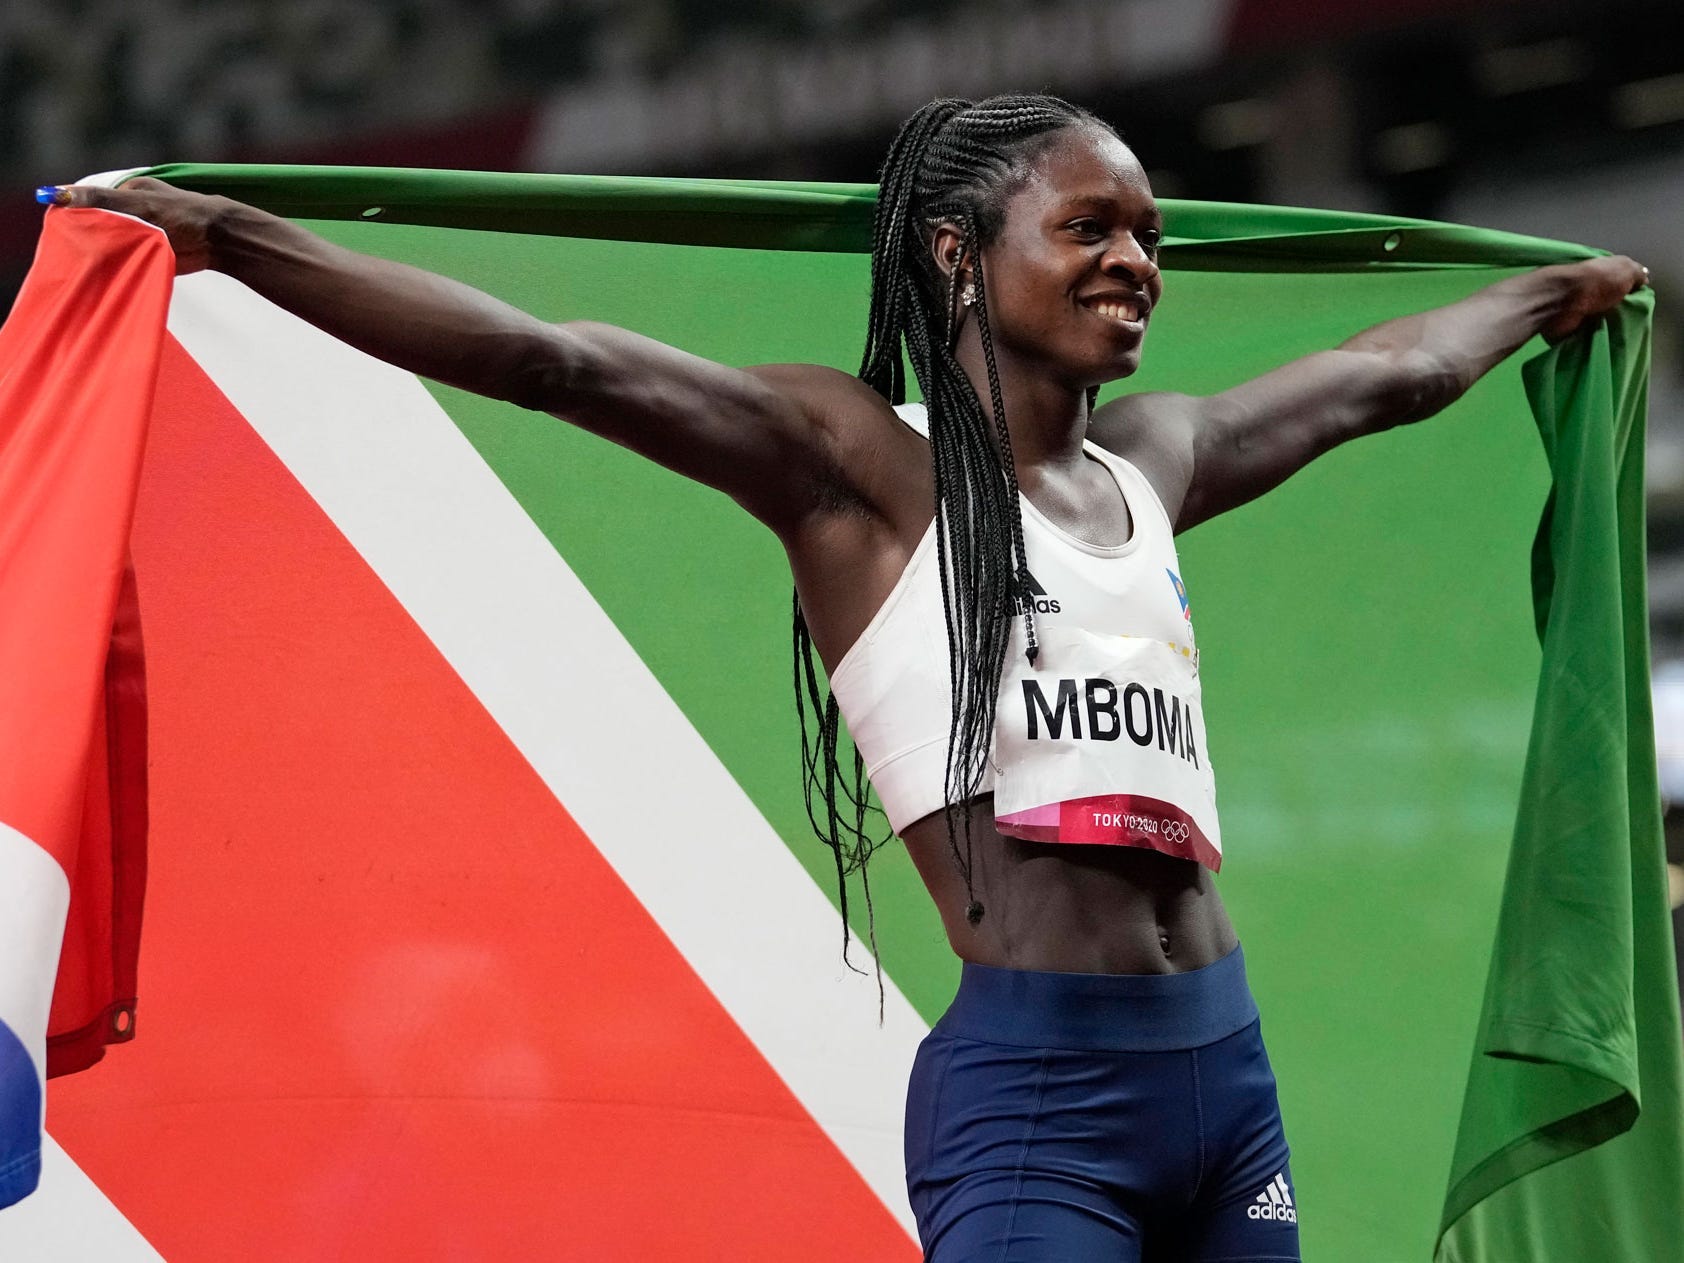 Namibias Christine Mboma feiert die Silbermedaille in Tokio 2020.